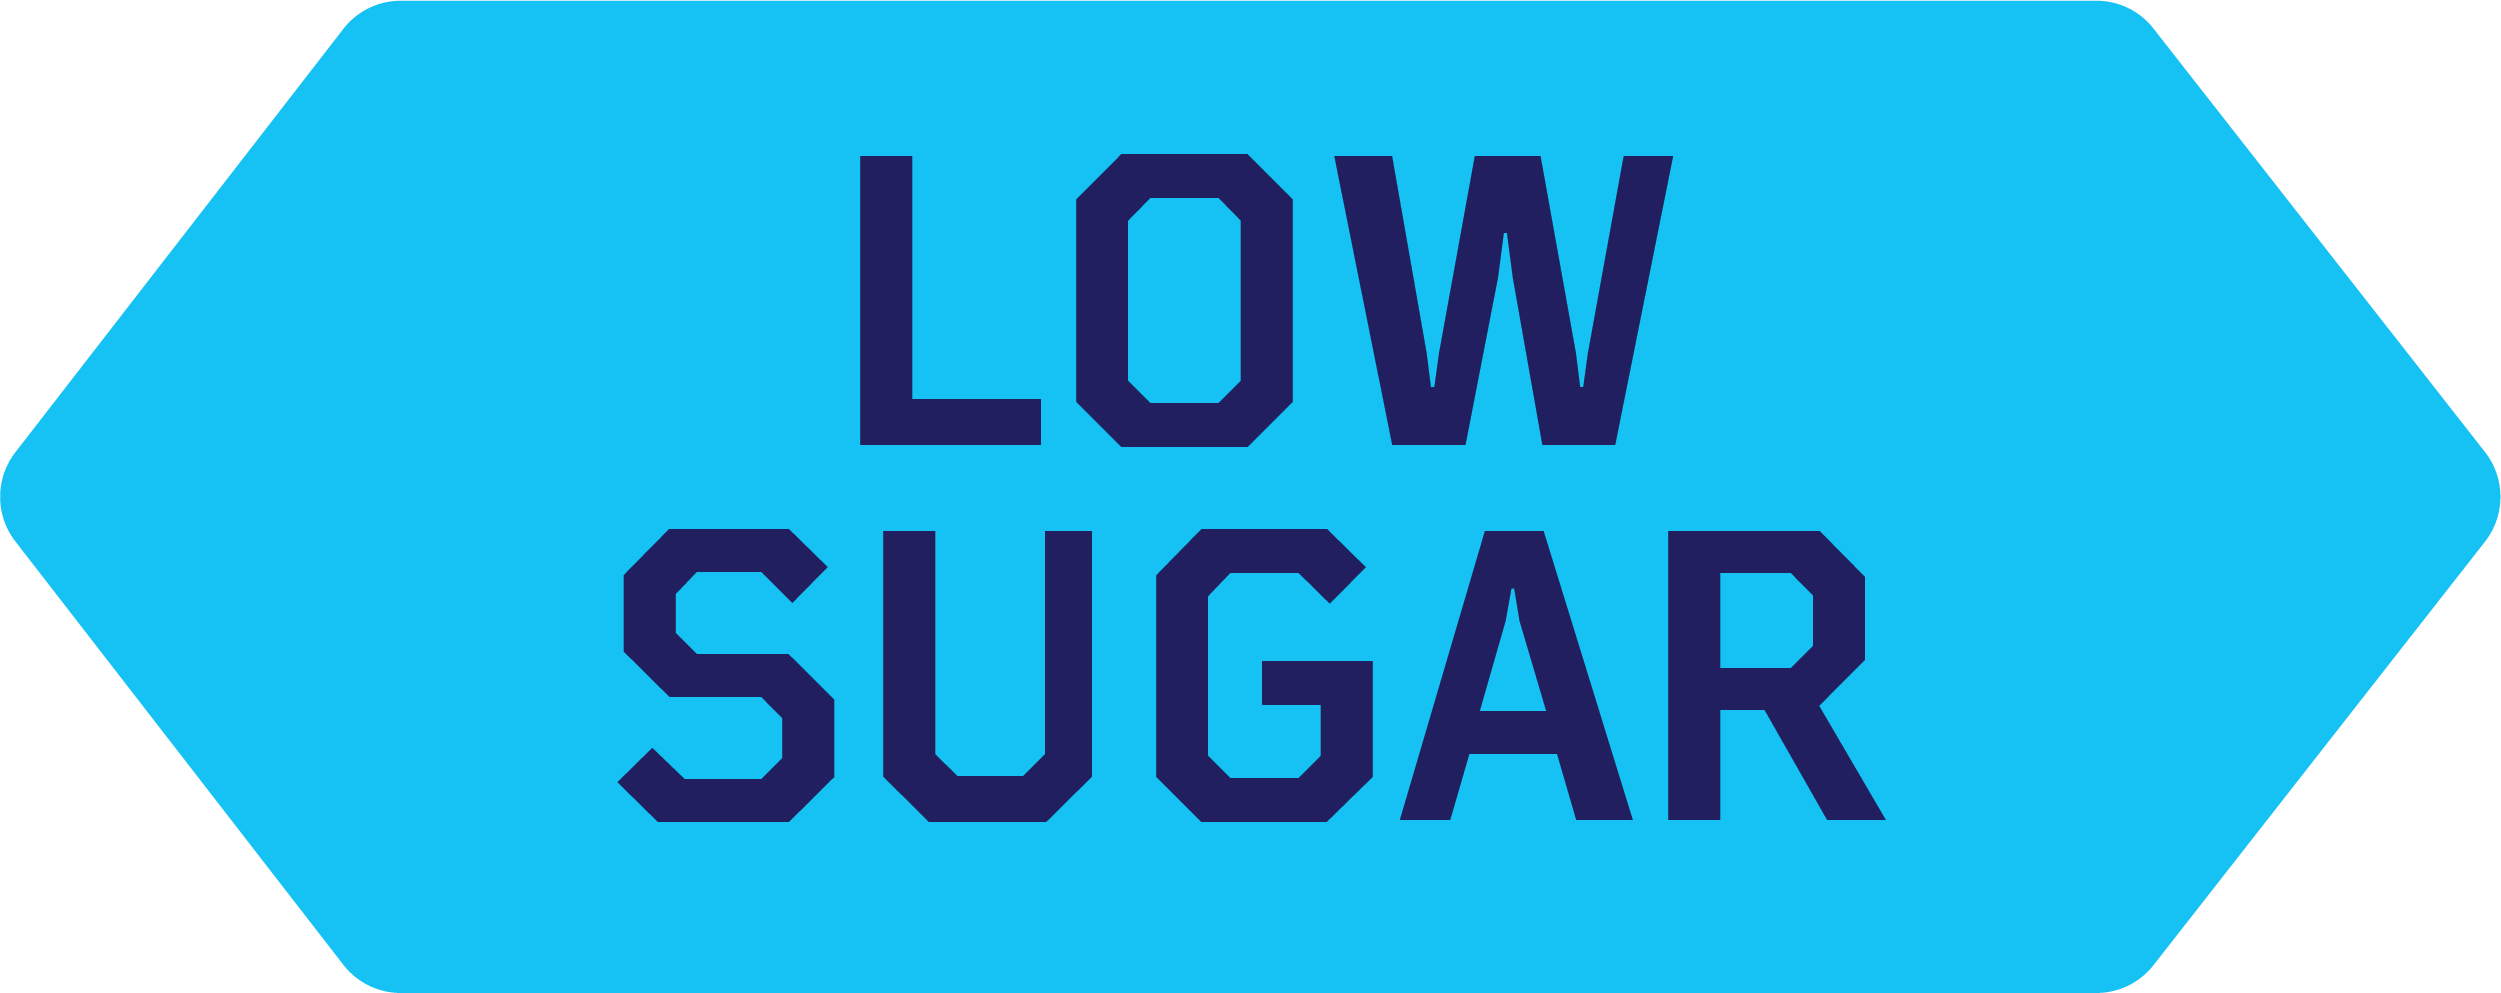 low sugar